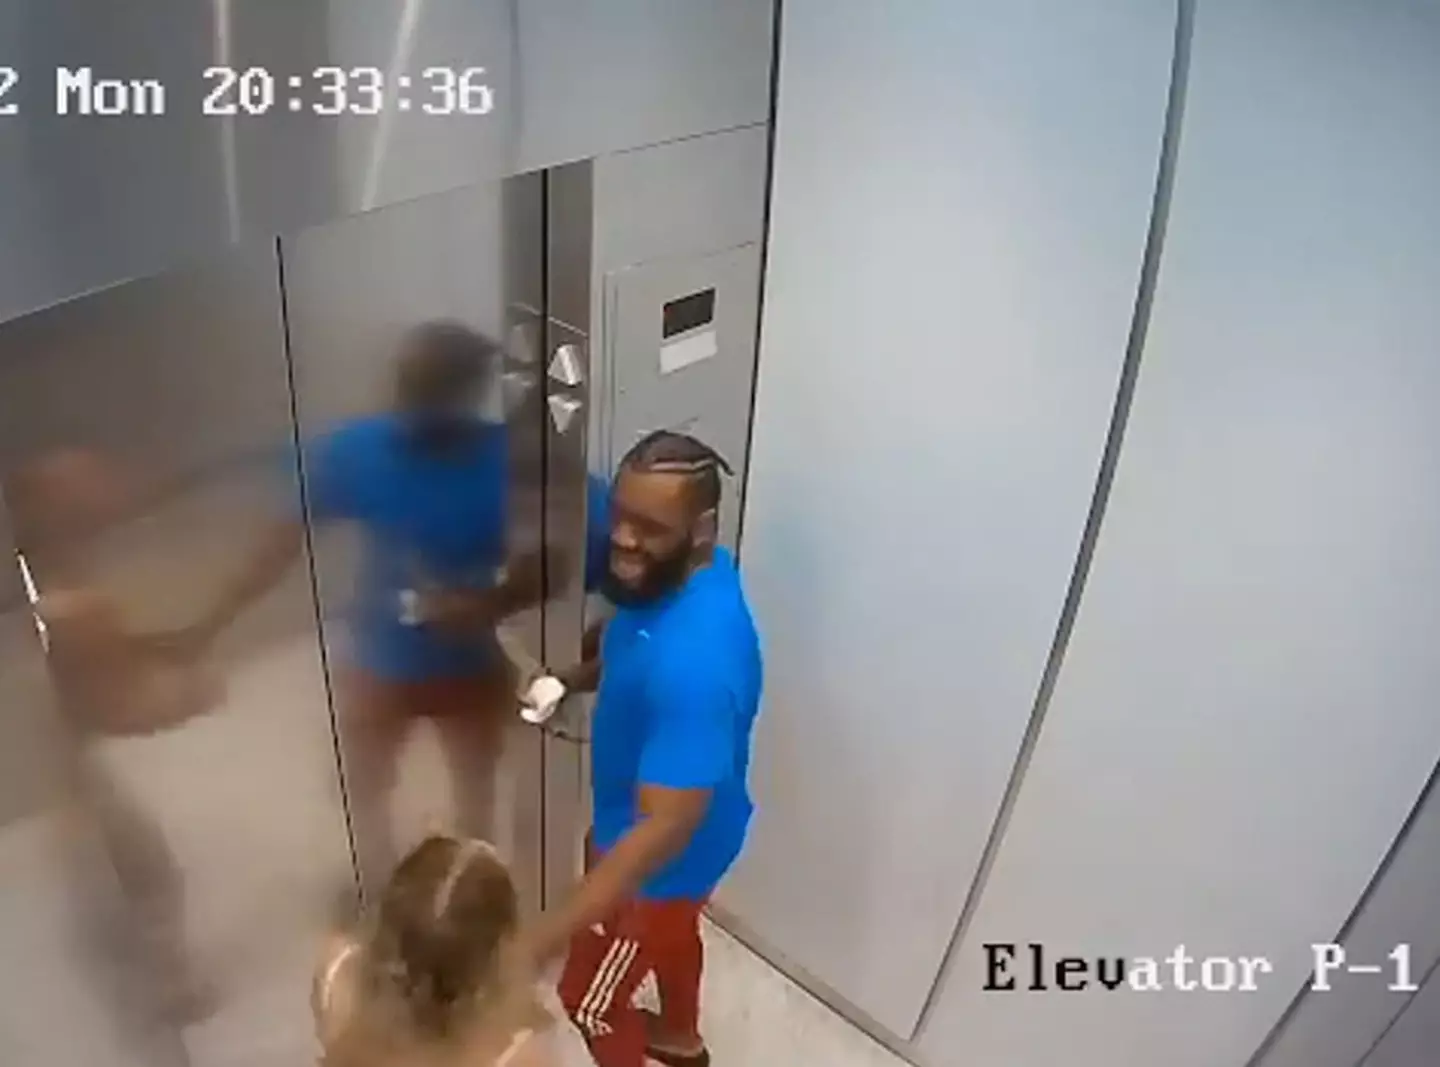 Still from the elevator video.